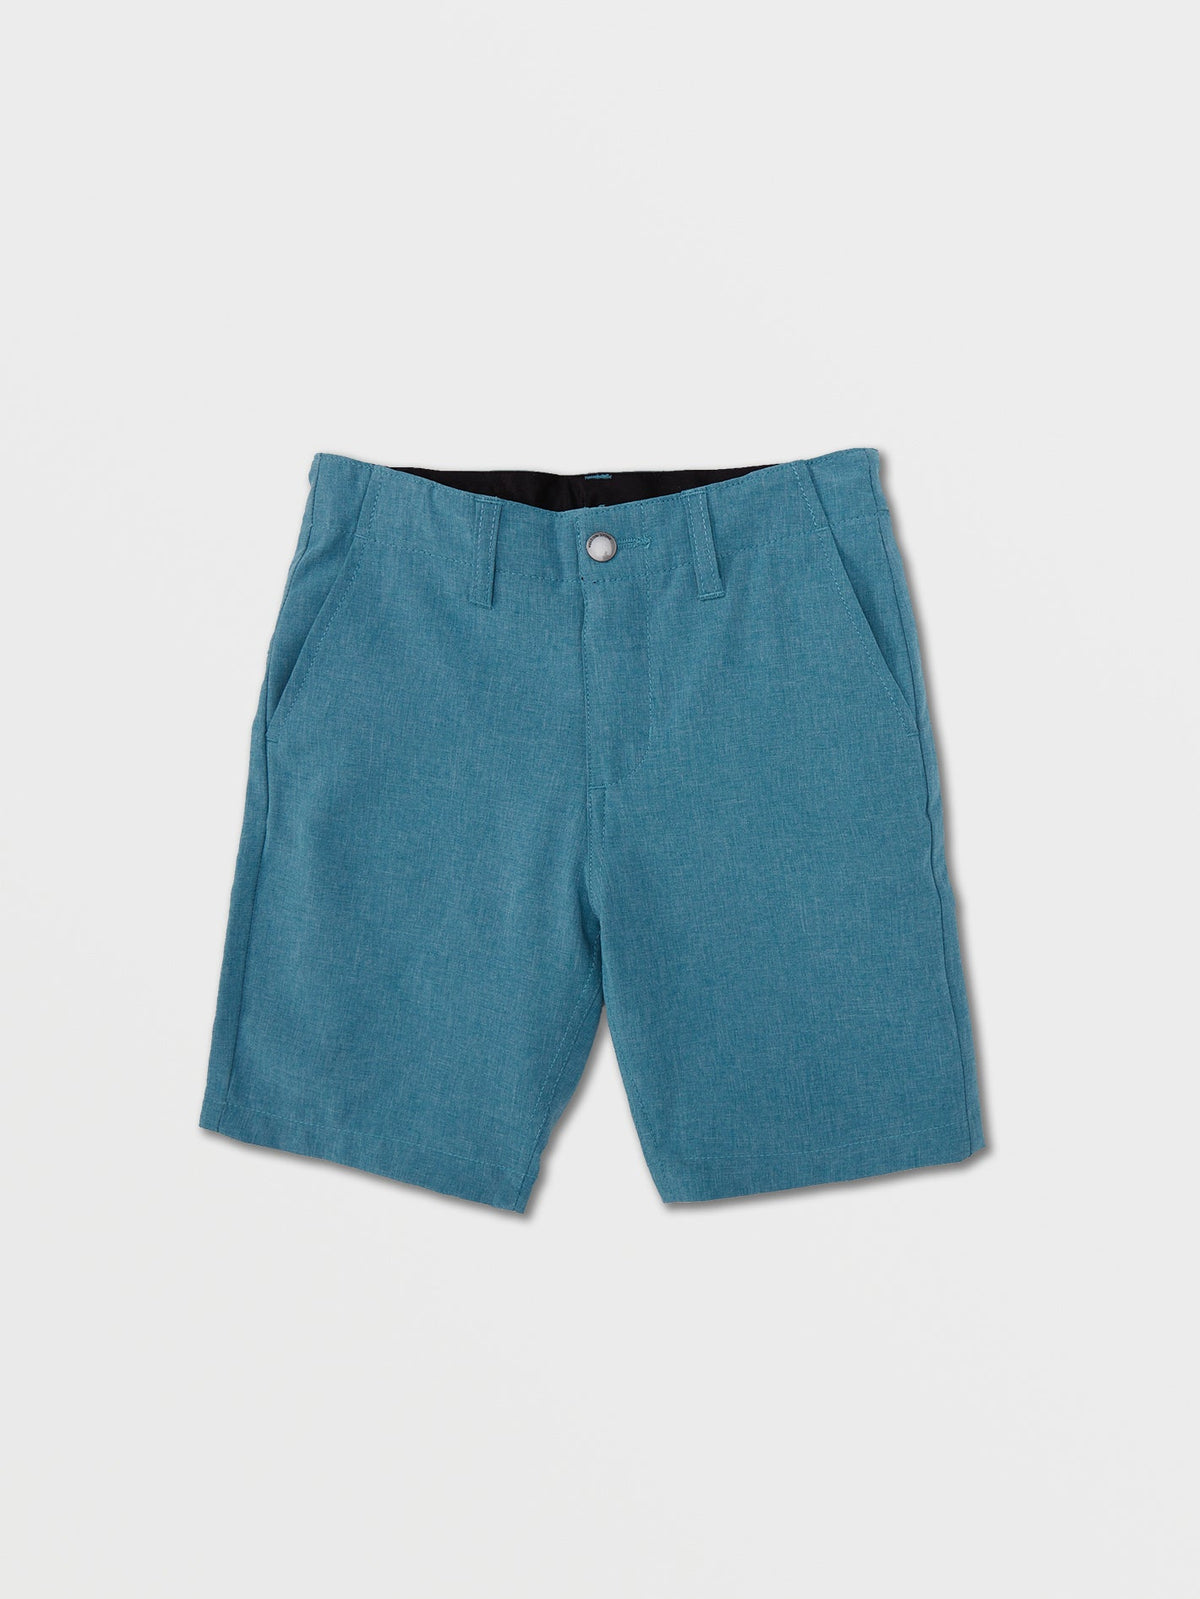 Volcom Kerosene Hybrid Boys Shorts (Age 2-7) Sun Faded Indigo